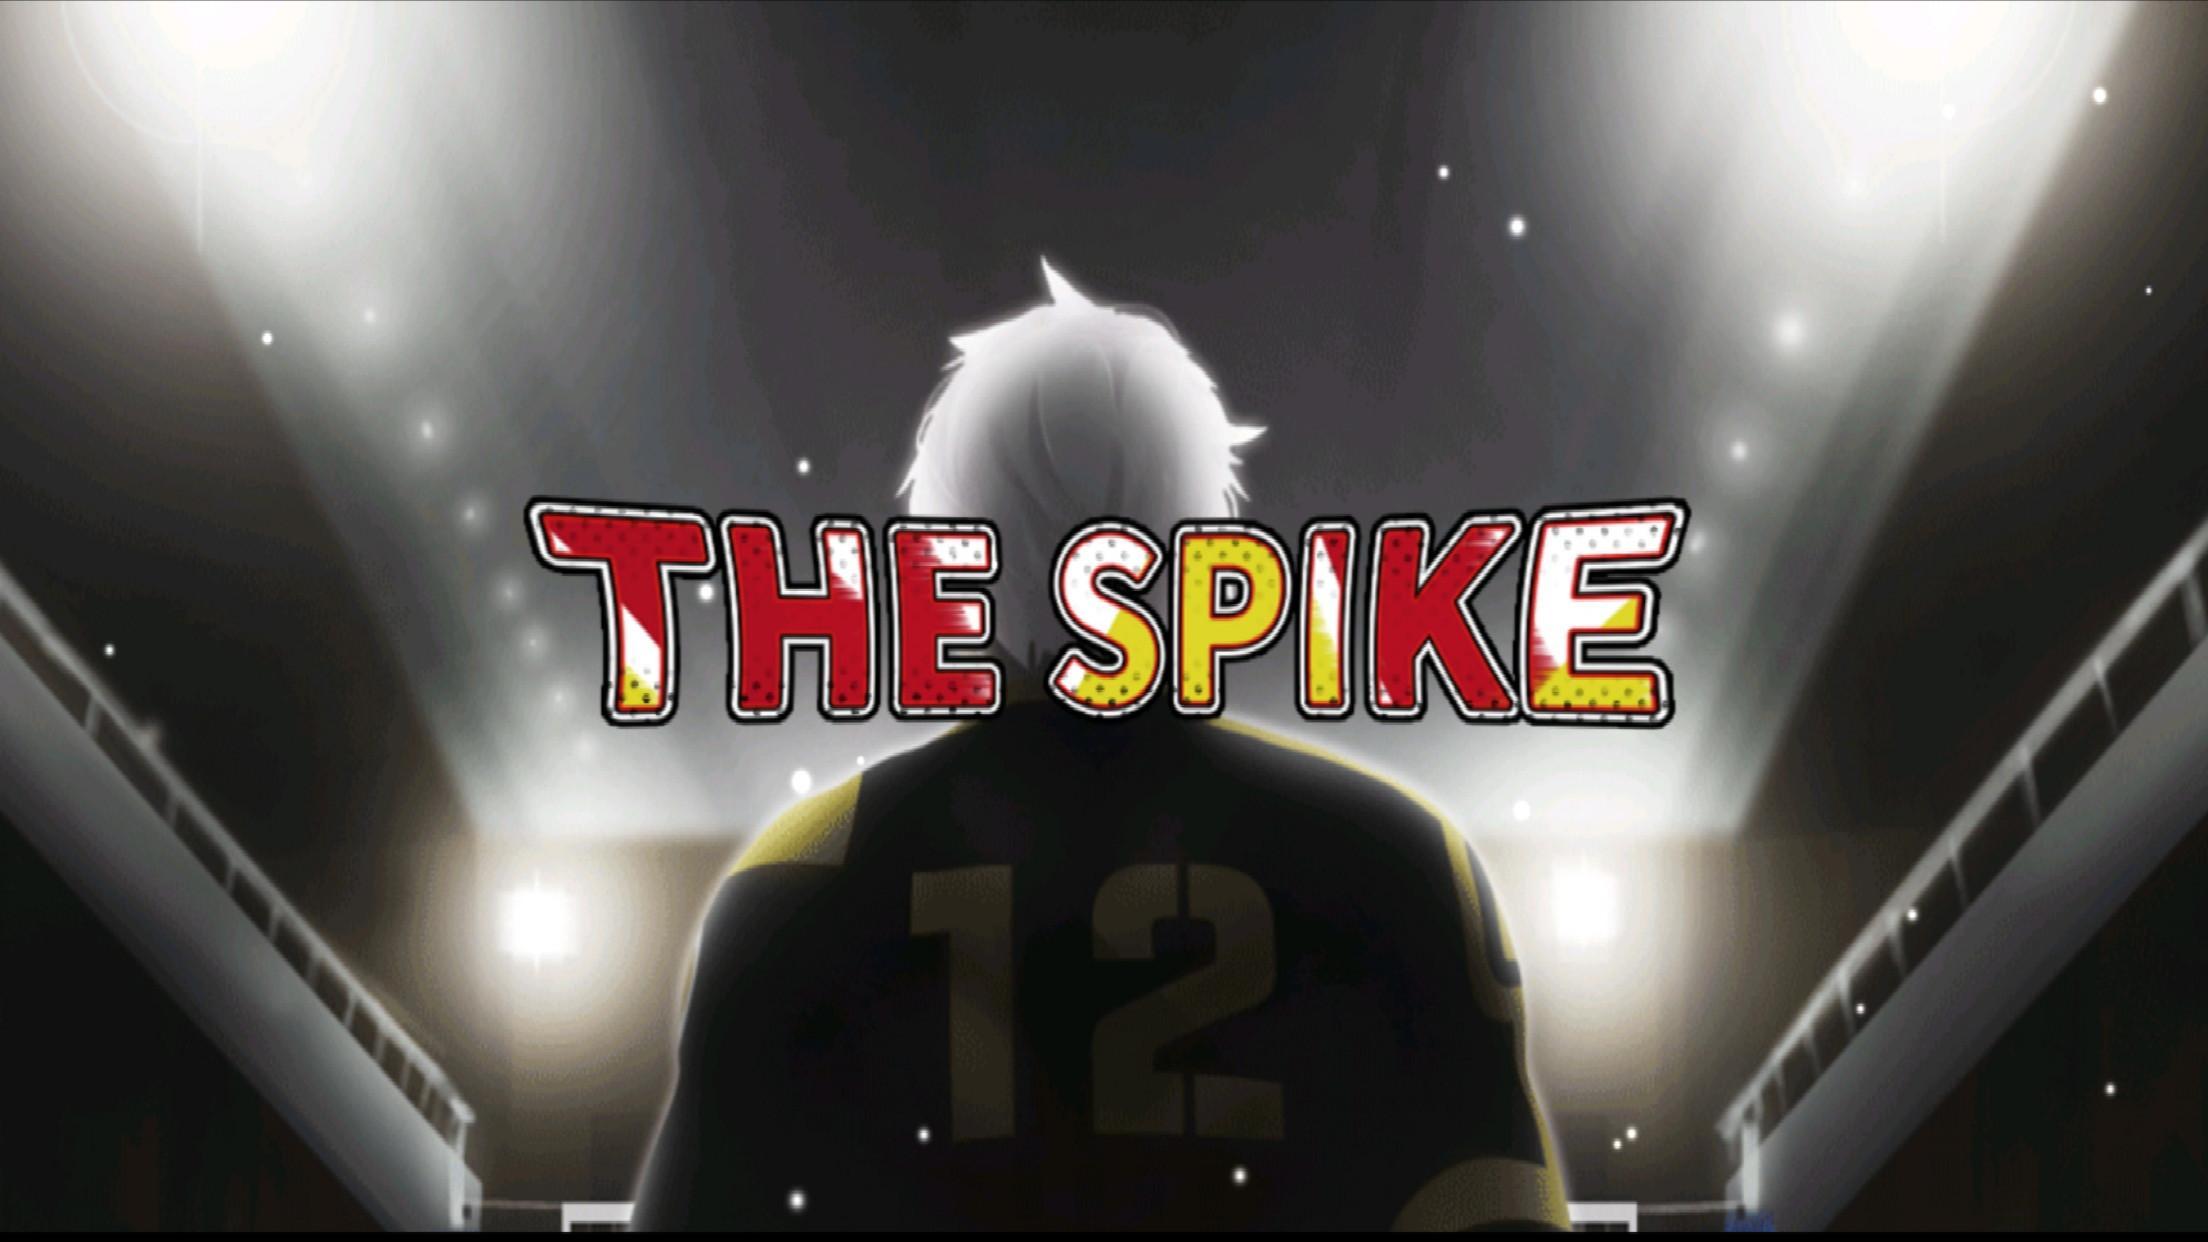 The spike volleyball story мод. The Spike Volleyball игра. The Spike Volleyball story. Spike в волейболе. Спайк игра волейбол.